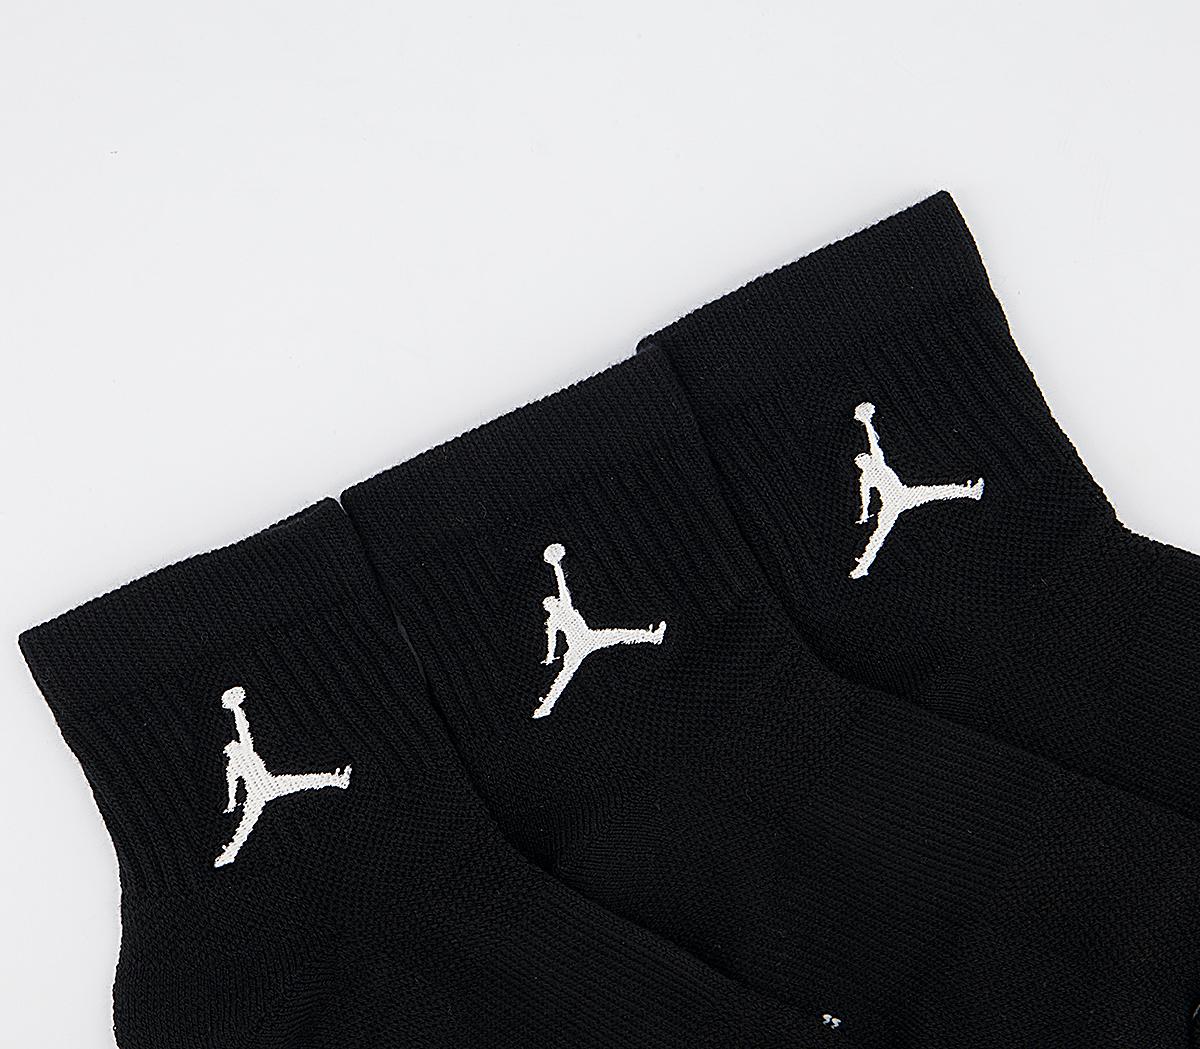 Jordan Jordan Ankle Socks Black White - Accessories